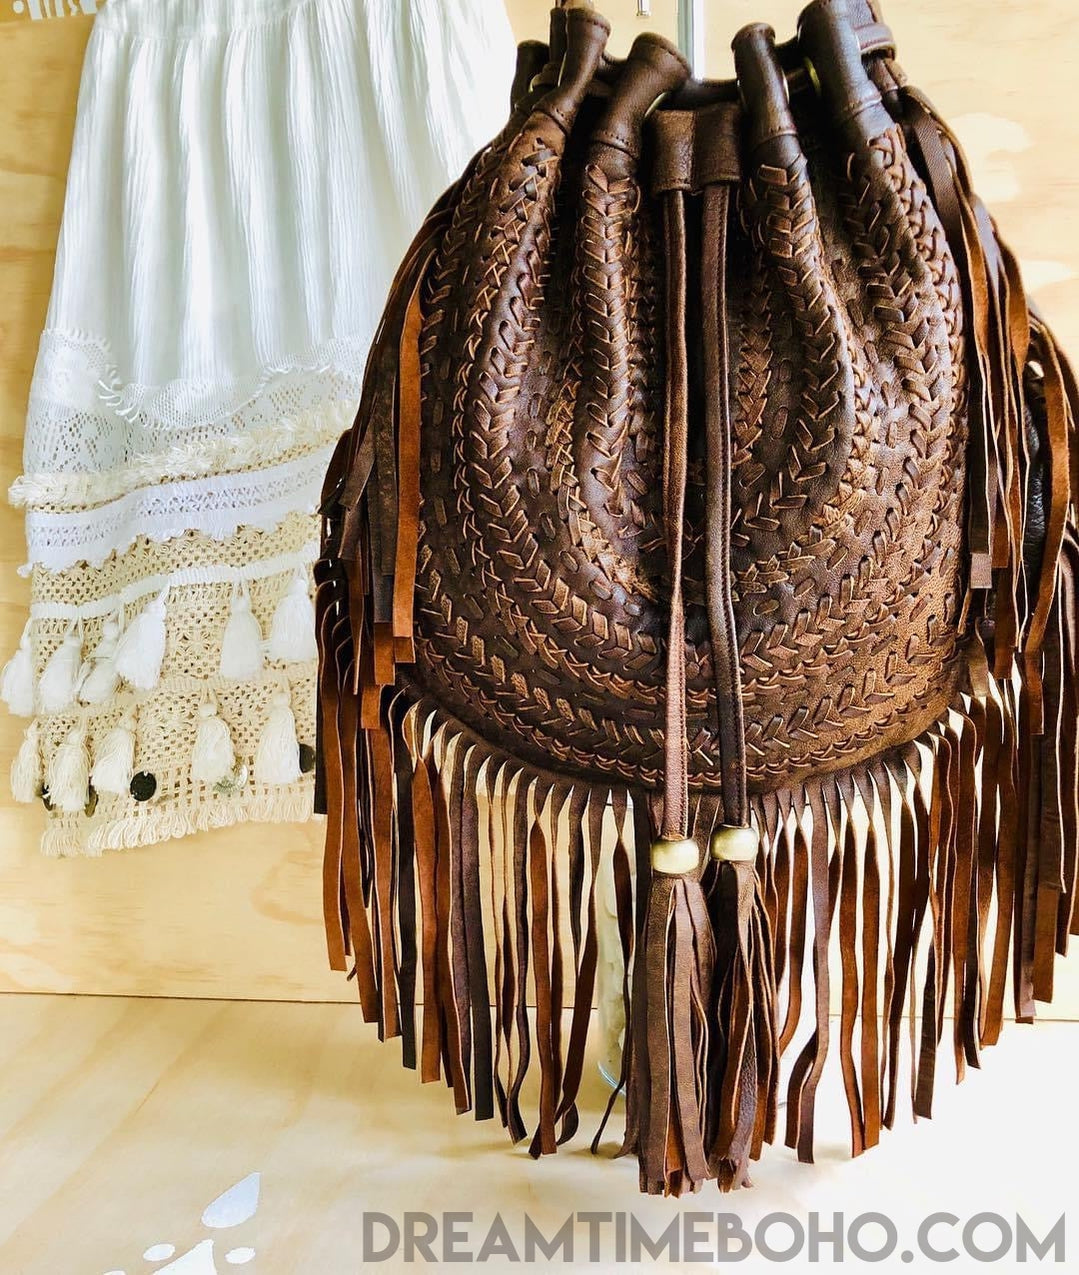 Gorgeous keep It gypsy Shoulder Handbag Purse Bag Lovely!